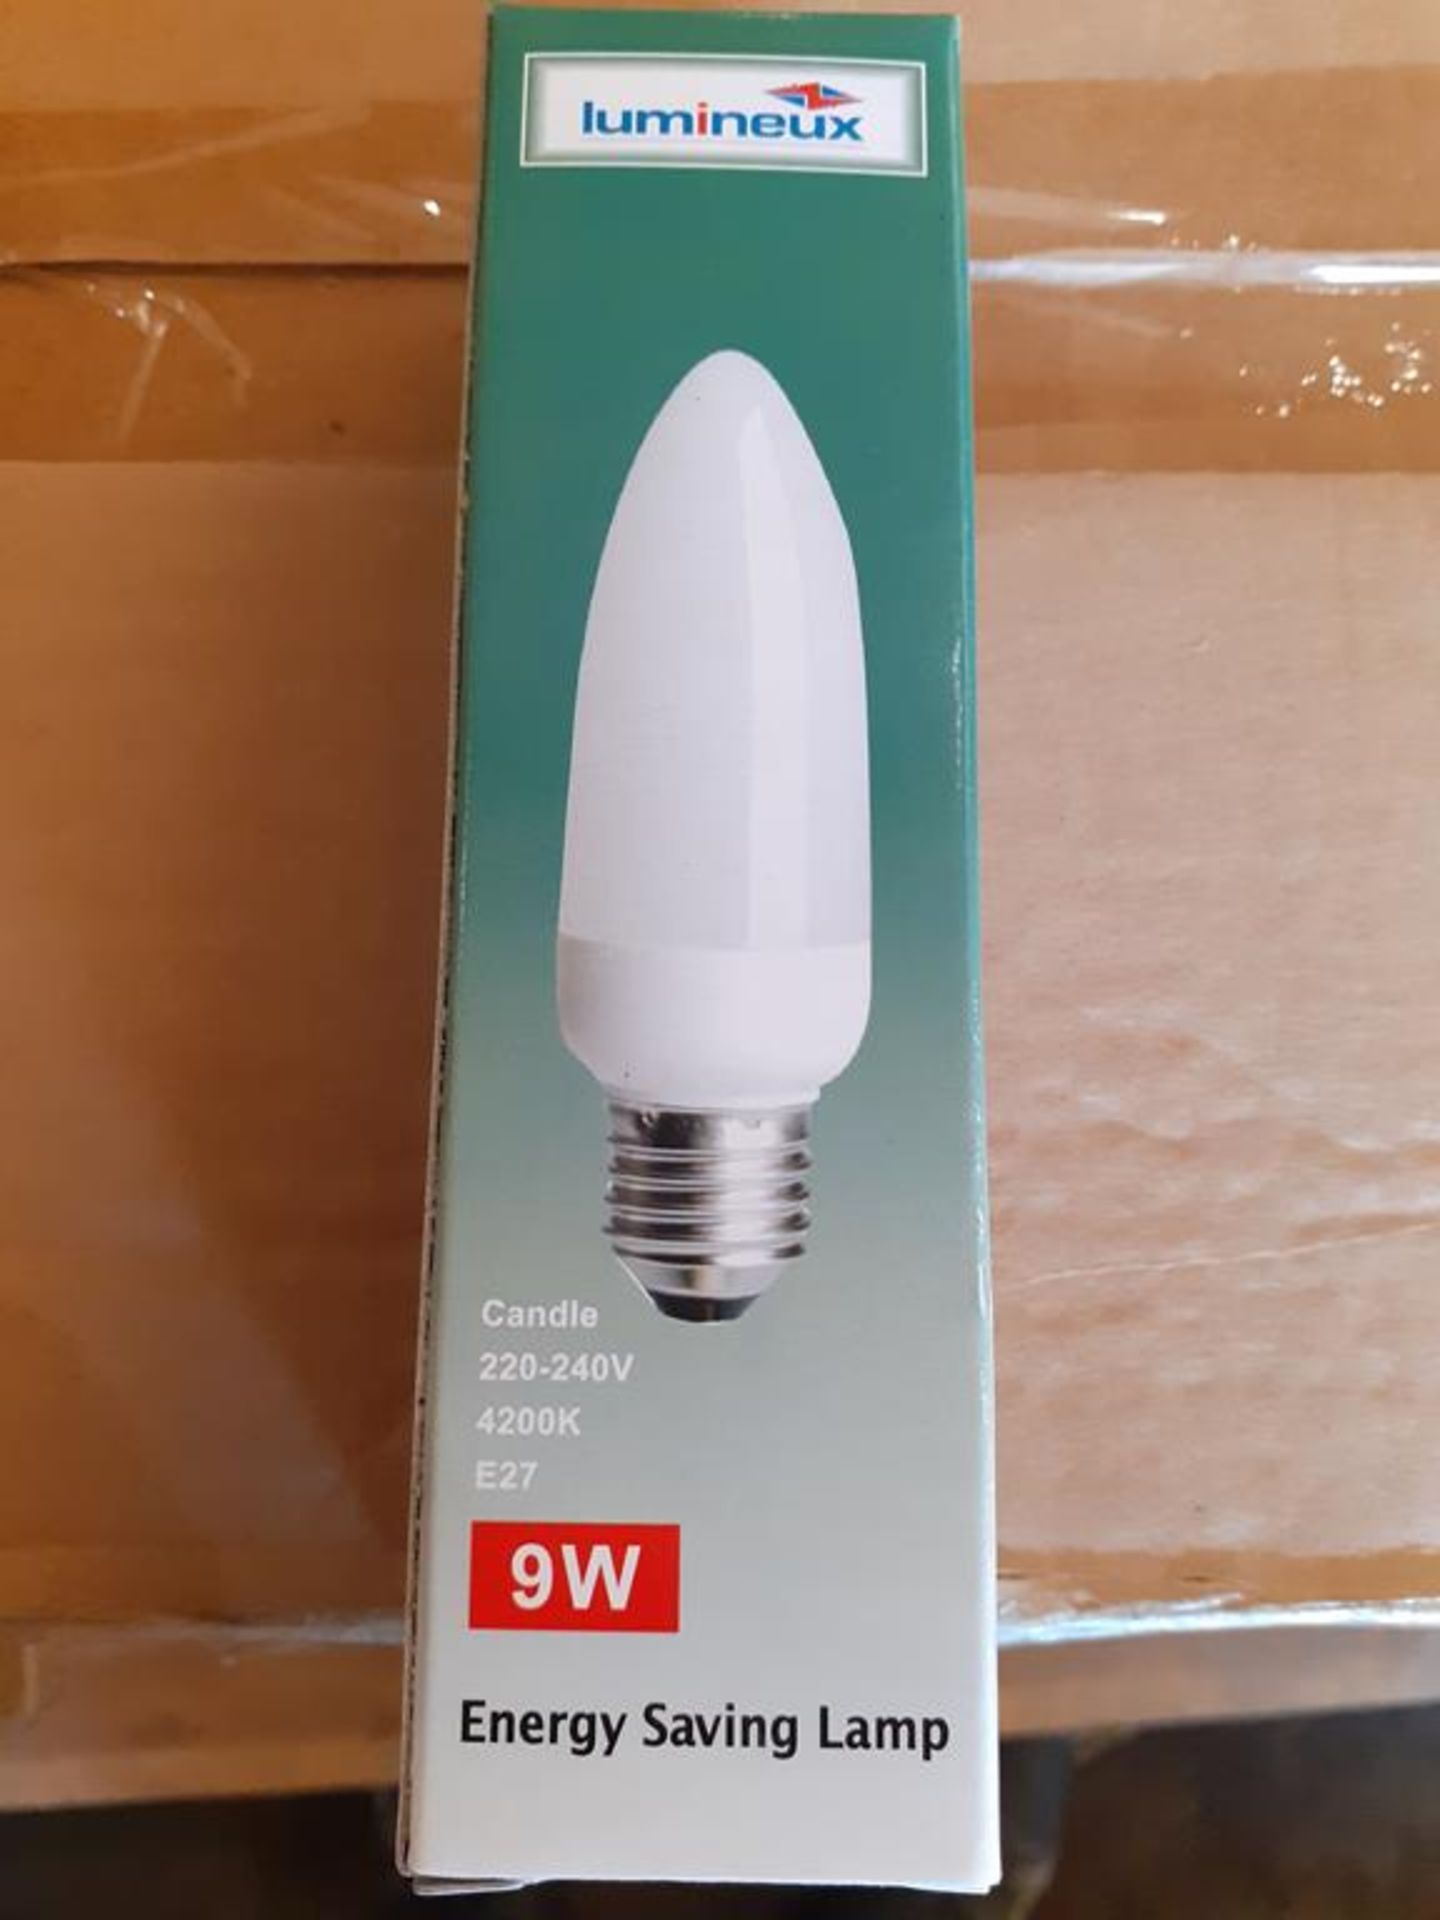 7x boxes of Lumineux Candle 9W E27 4200K 220-240V Engery Saving Bulbs (50pcs per box) - Image 3 of 4